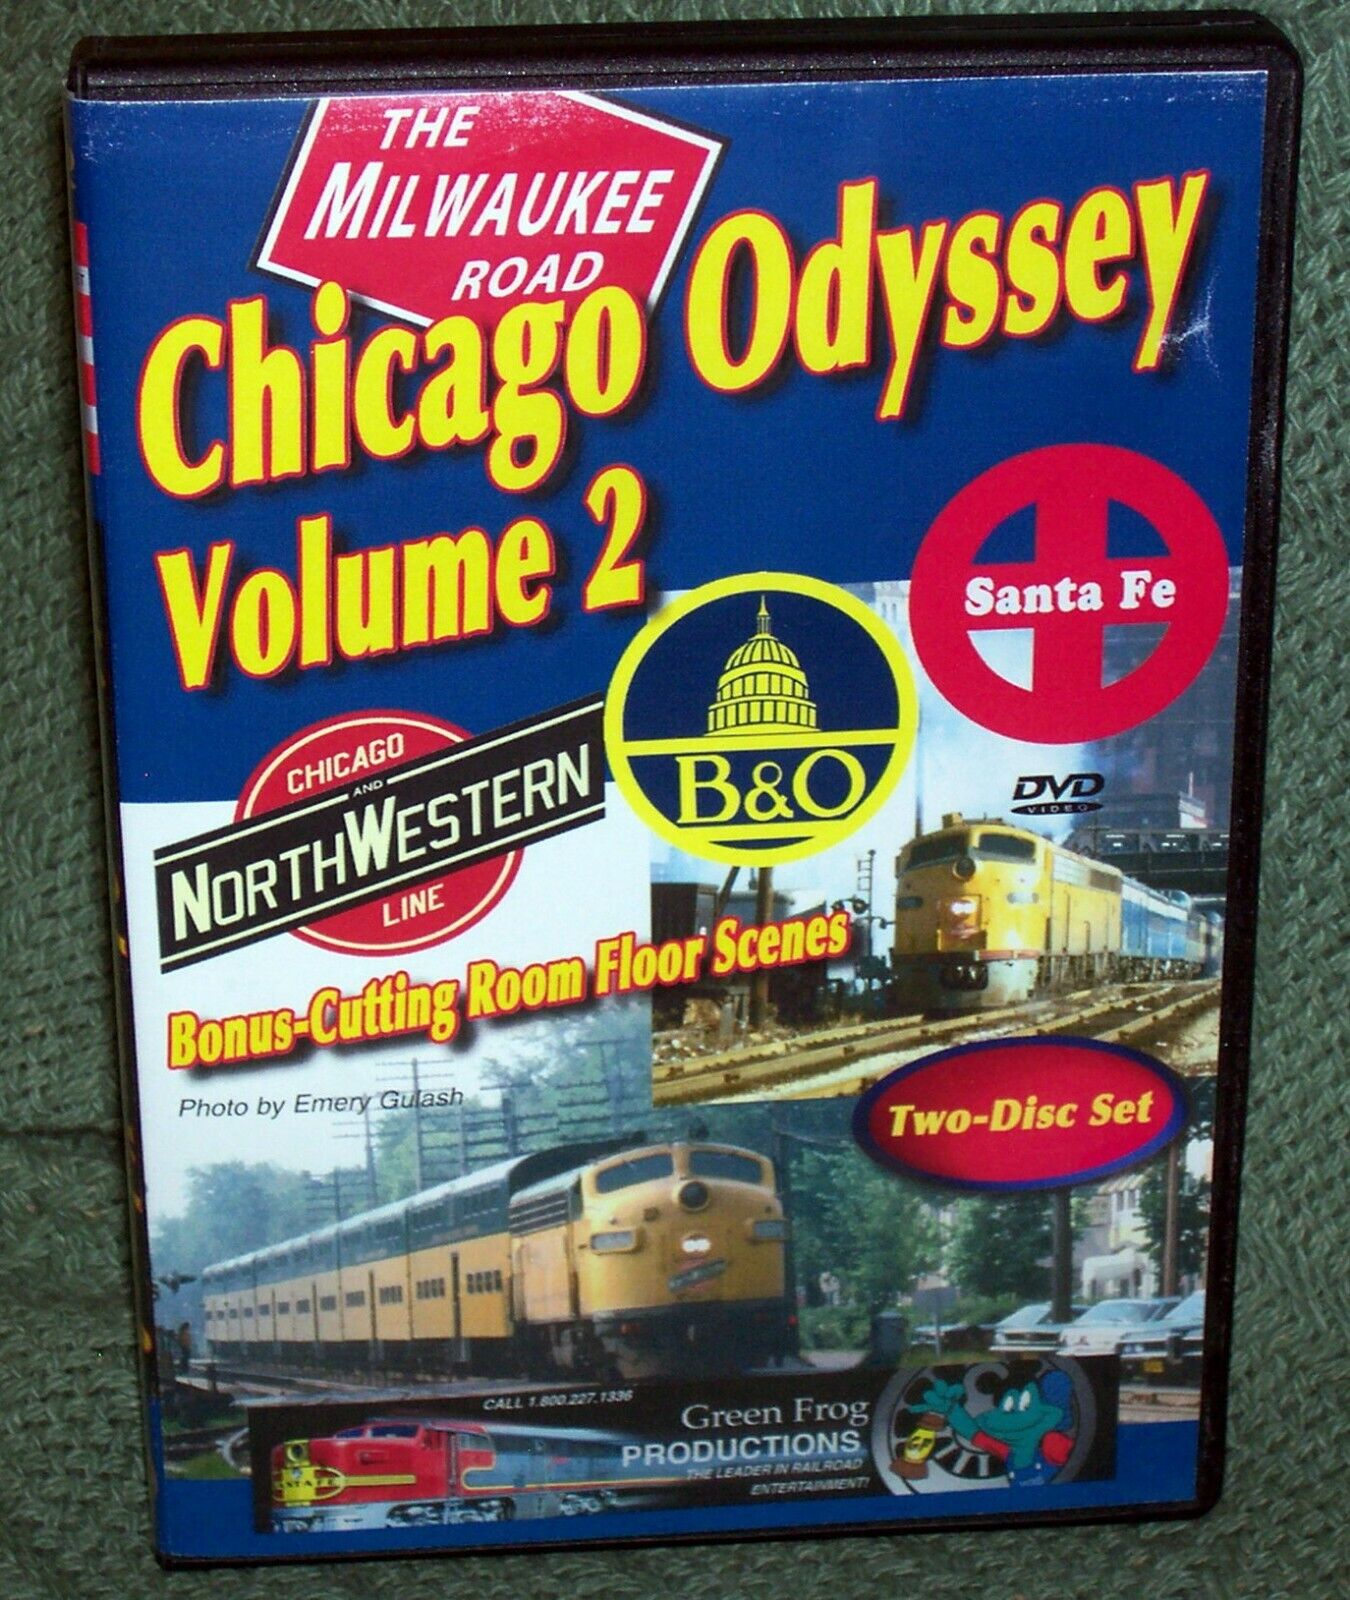 20013 DVD CHICAGO ODYSSEY VOL. 2 VINTAGE 60'S 70'S CNW B&O CB&Q SOO LINE GM&O